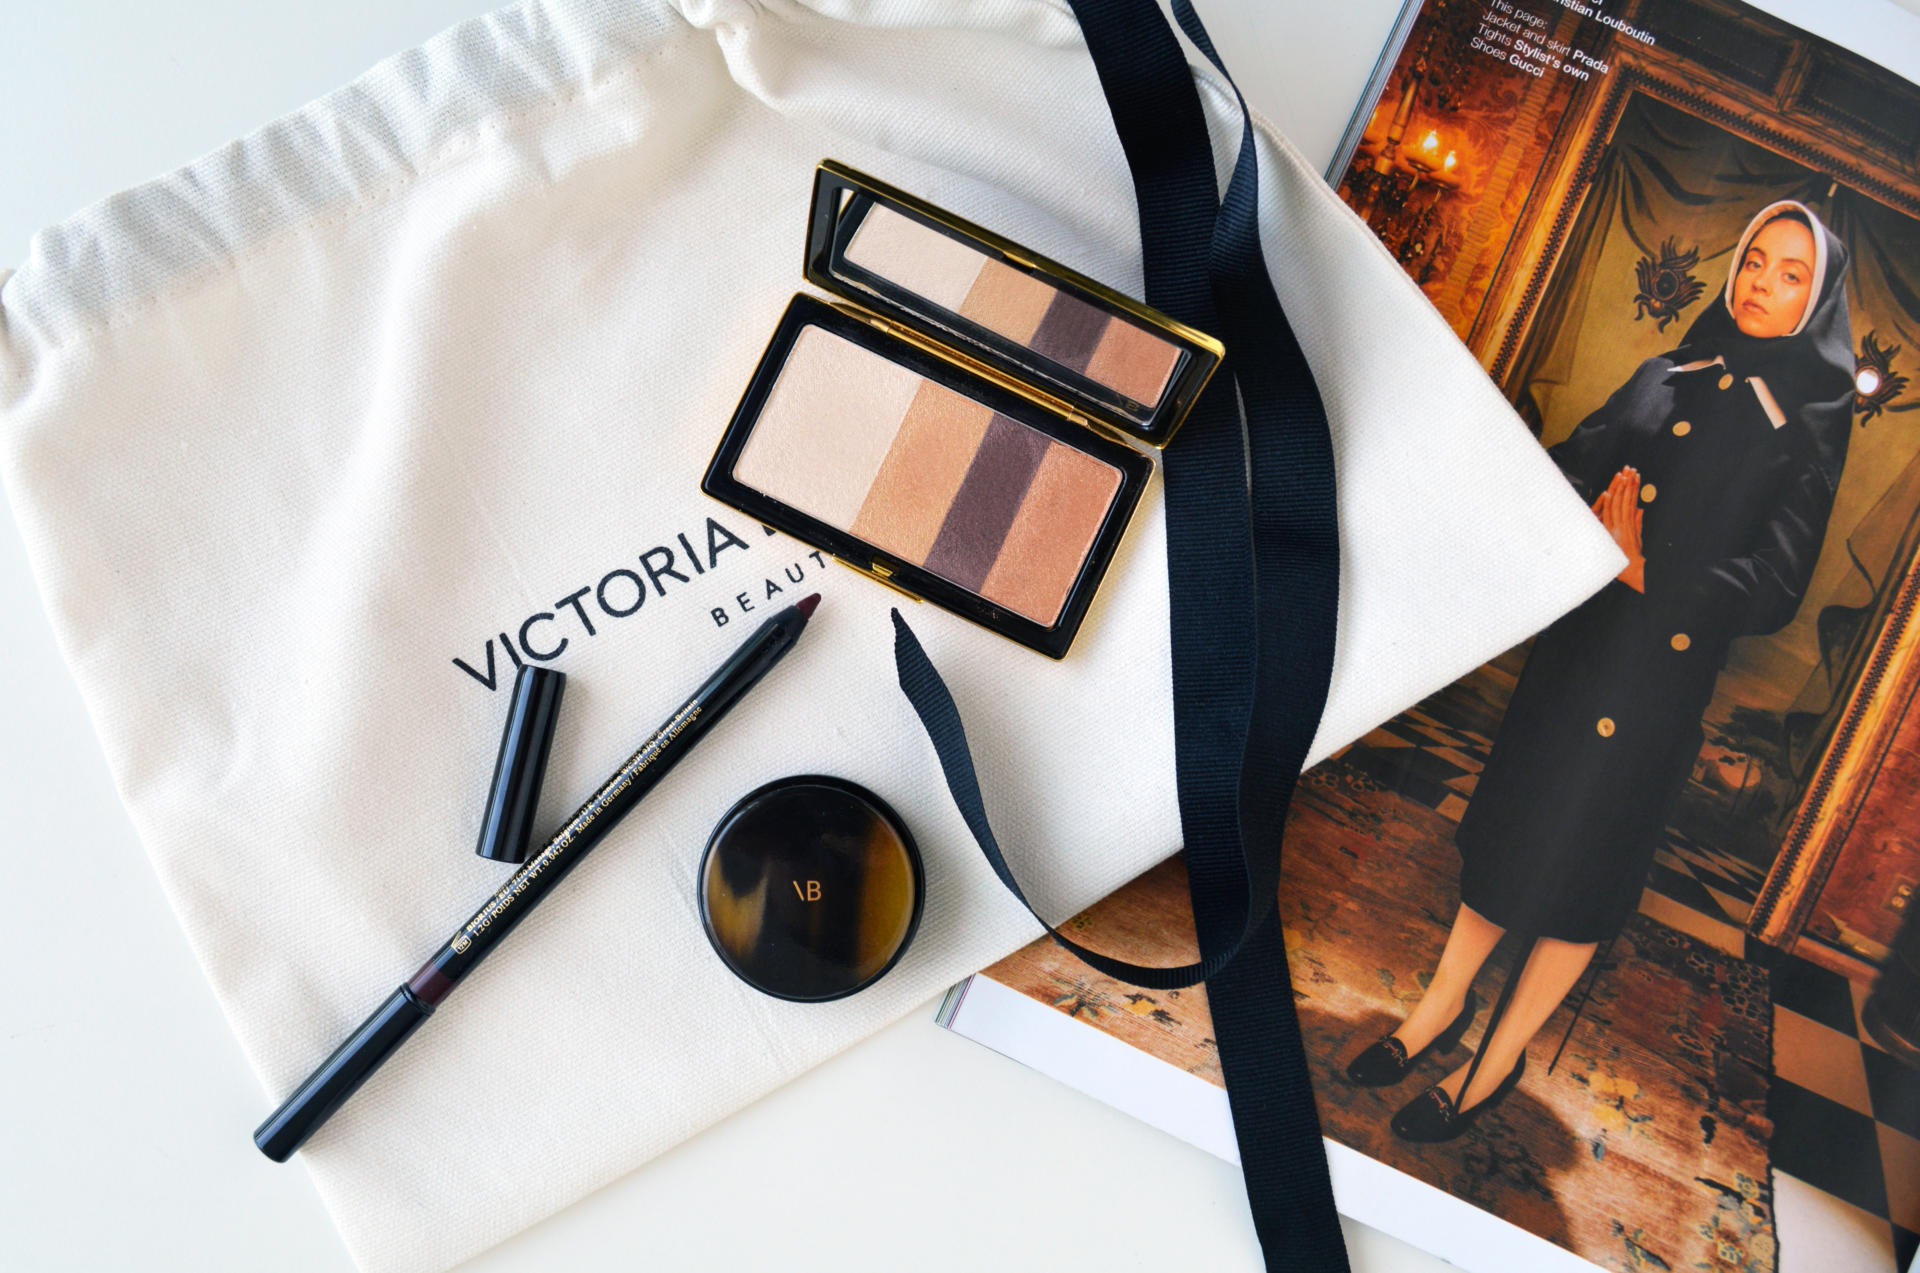 Review | Victoria Beckham Beauty